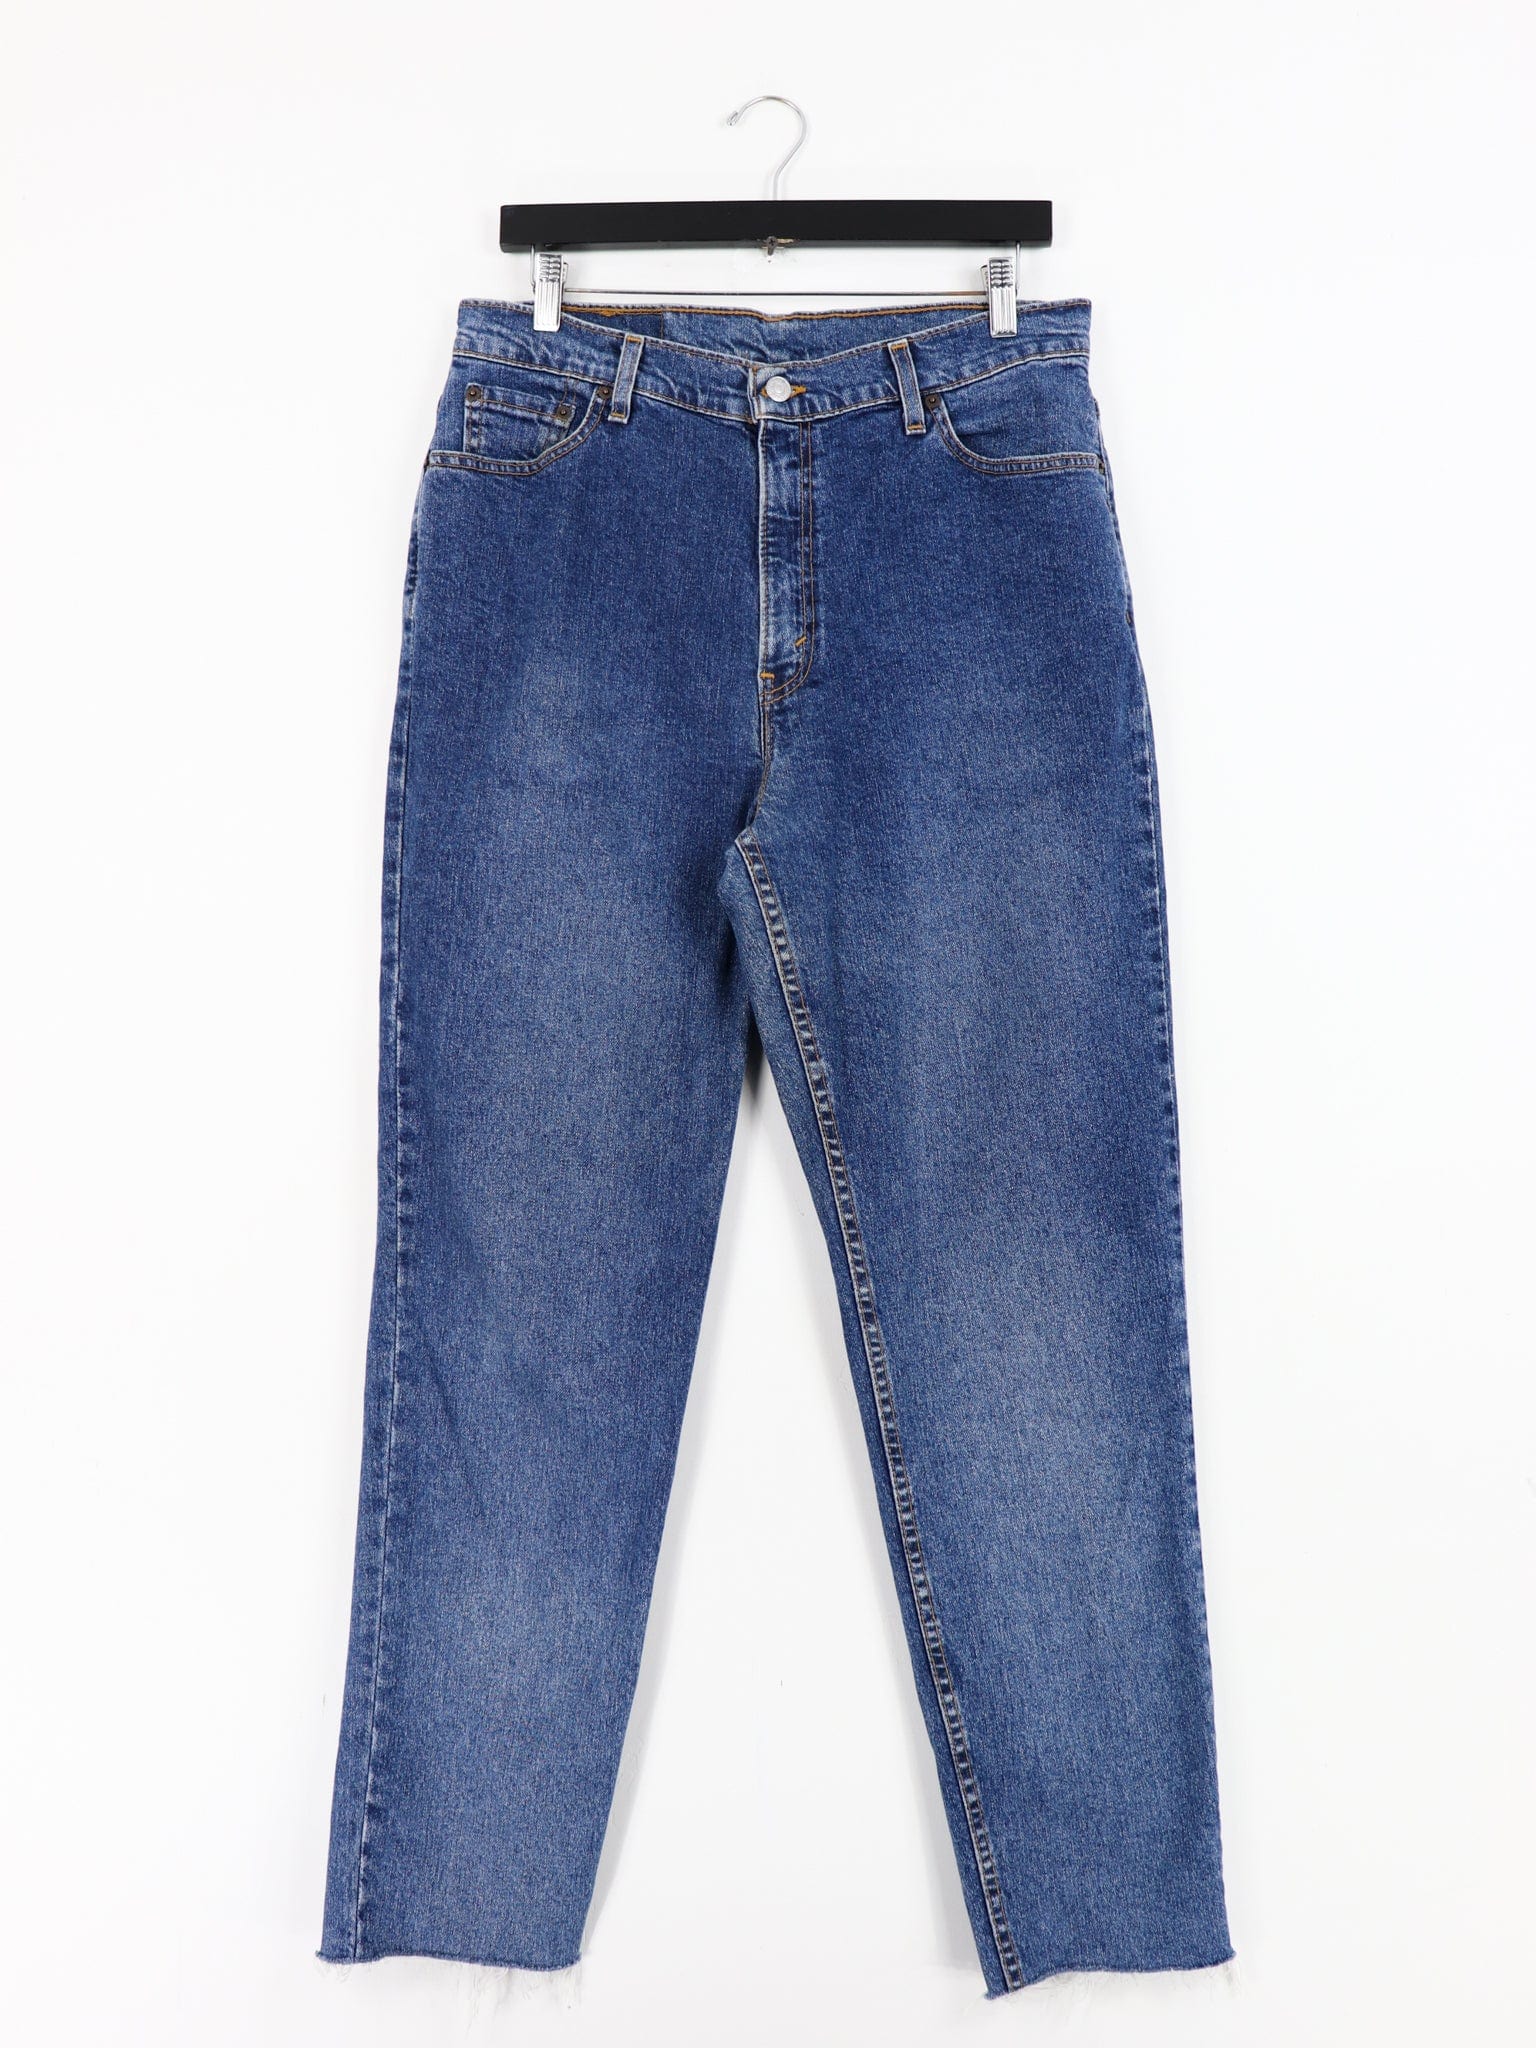 Levi's Jeans Vintage Levi's 512 Slim Tapered Fit Denim Jeans Women's Size 14M(34 x 30)